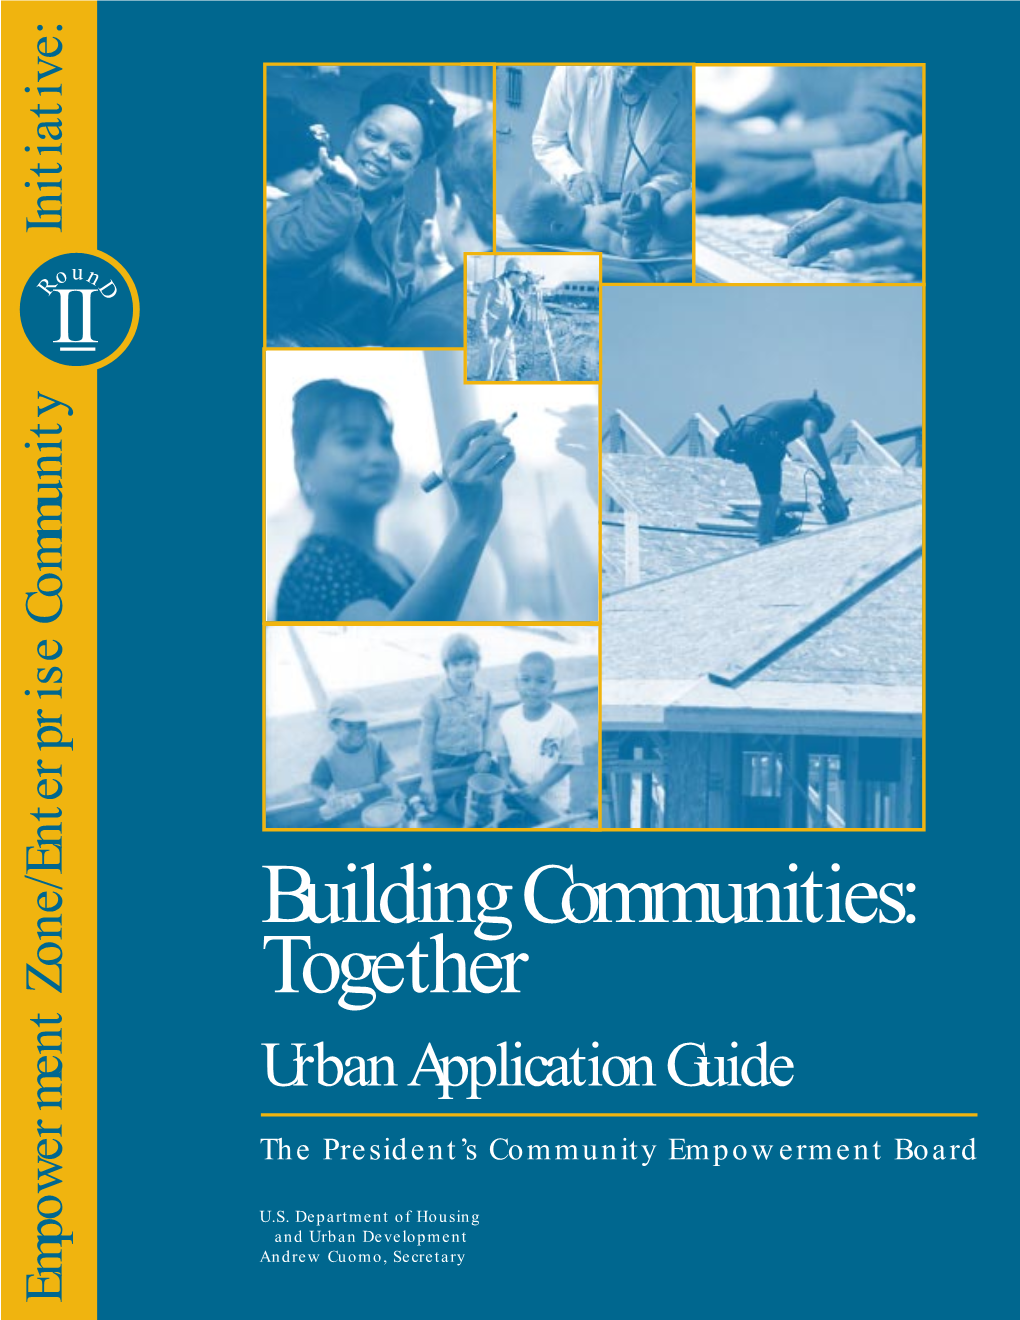 Urban Application Guide